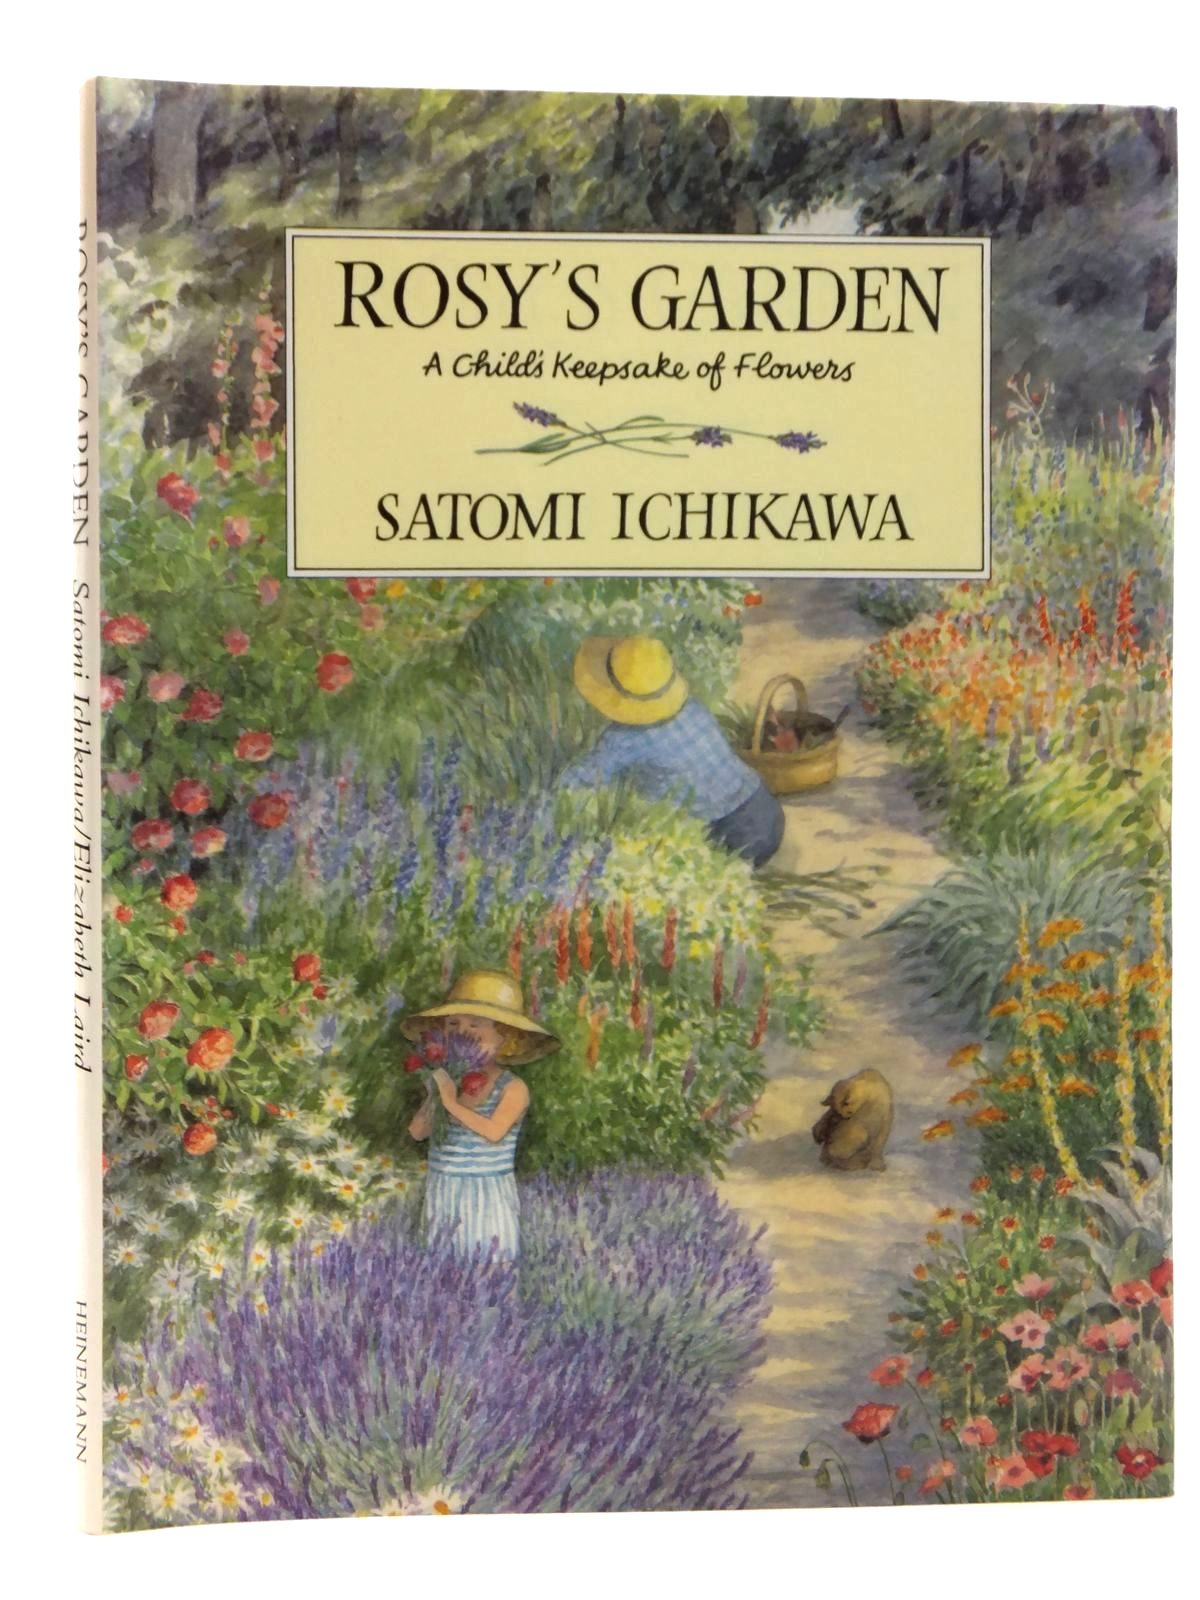 Photo of ROSY'S GARDEN written by Laird, Elizabeth illustrated by Ichikawa, Satomi published by William Heinemann Ltd. (STOCK CODE: 1317039)  for sale by Stella & Rose's Books